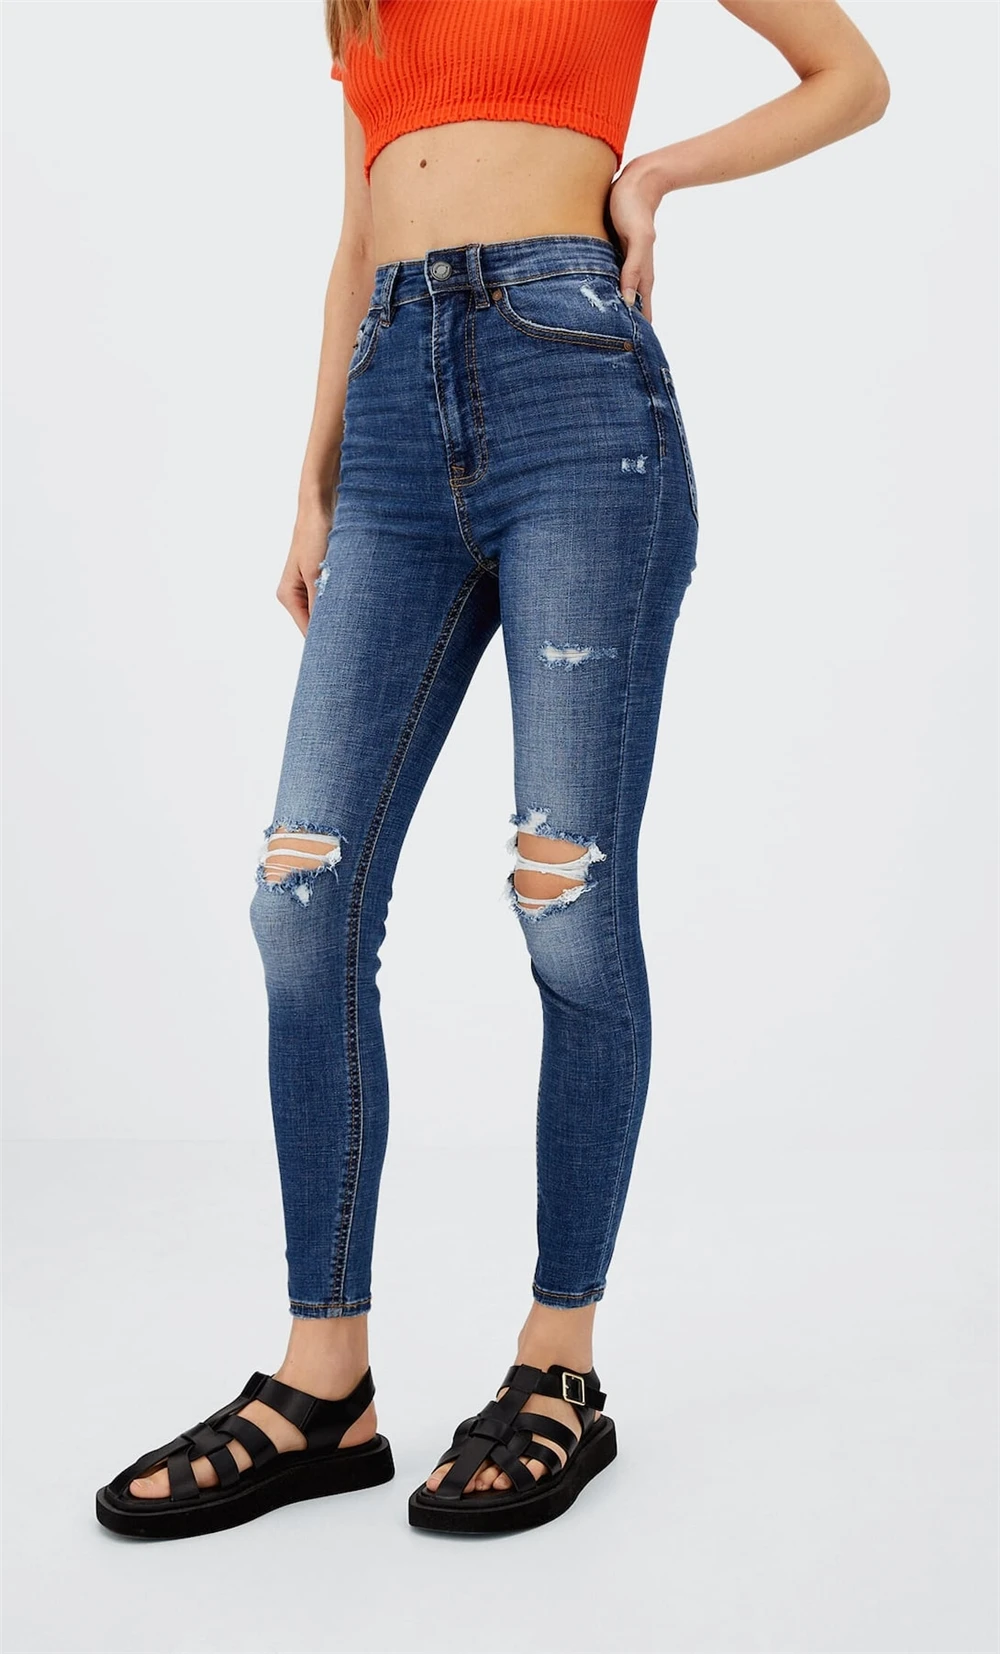 jeans skinny personalizado etiqueta privada moda alta calidad